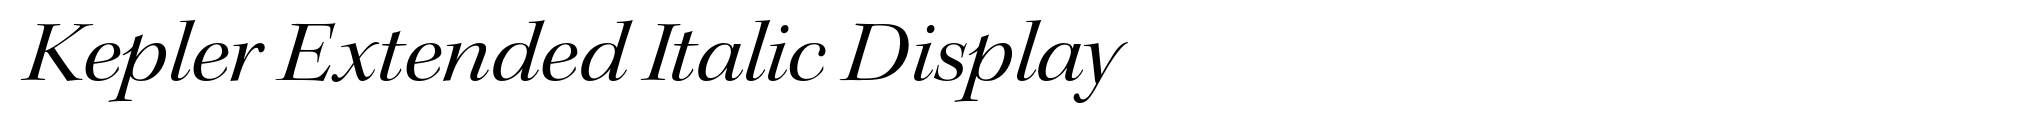 Kepler Extended Italic Display image